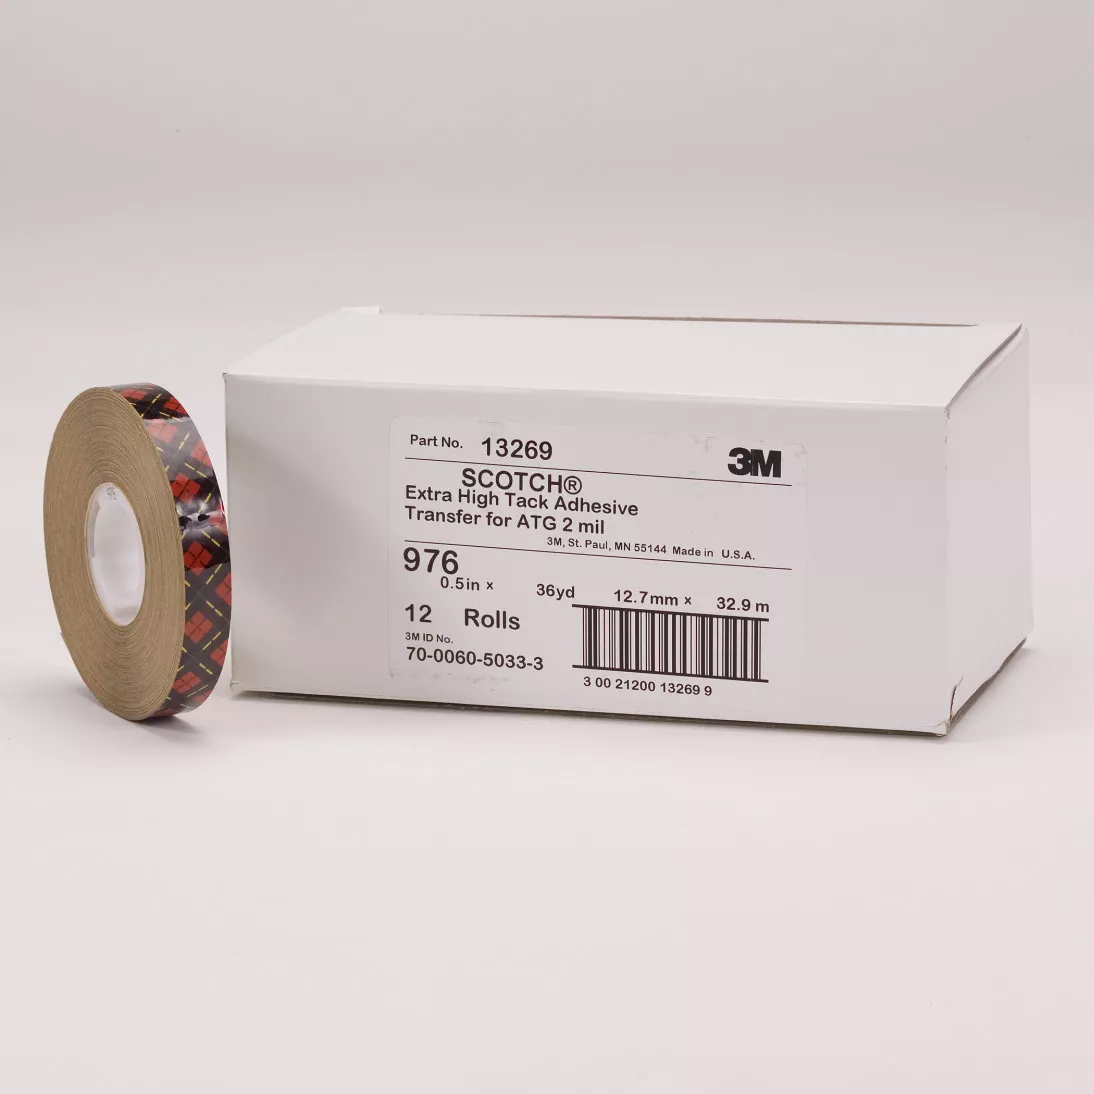 Scotch® ATG Adhesive Transfer Tape 976, Clear, 1/4 in x 60 yd, 2 mil, 12
rolls per inner, 6 inners per case